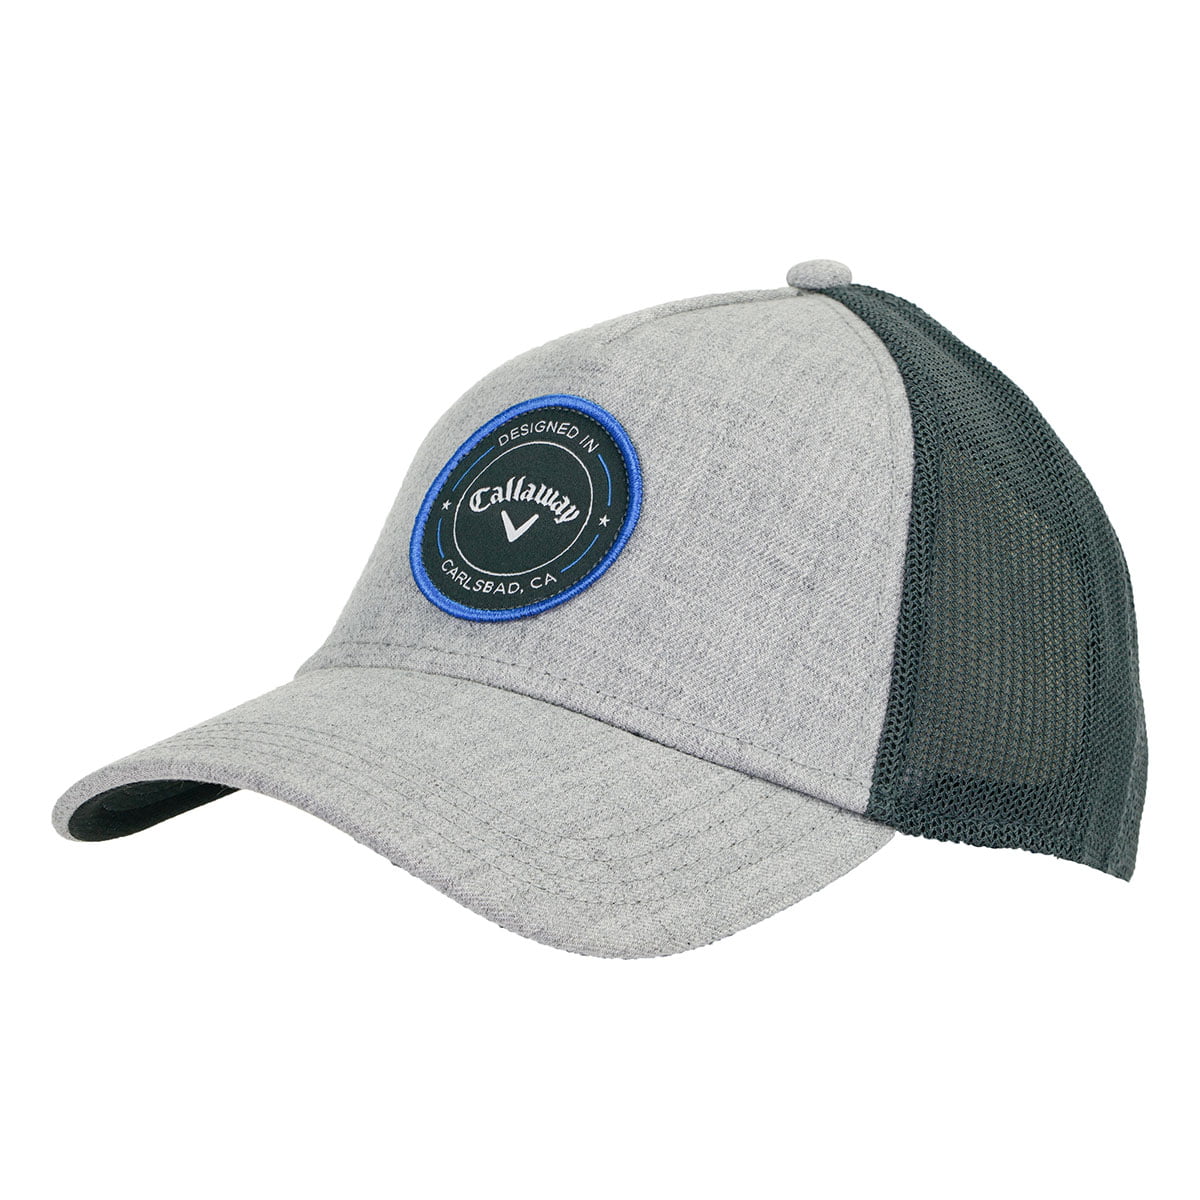 NEW Callaway Golf Trucker Adjustable Snapback Grey Hat/Cap - Walmart.com